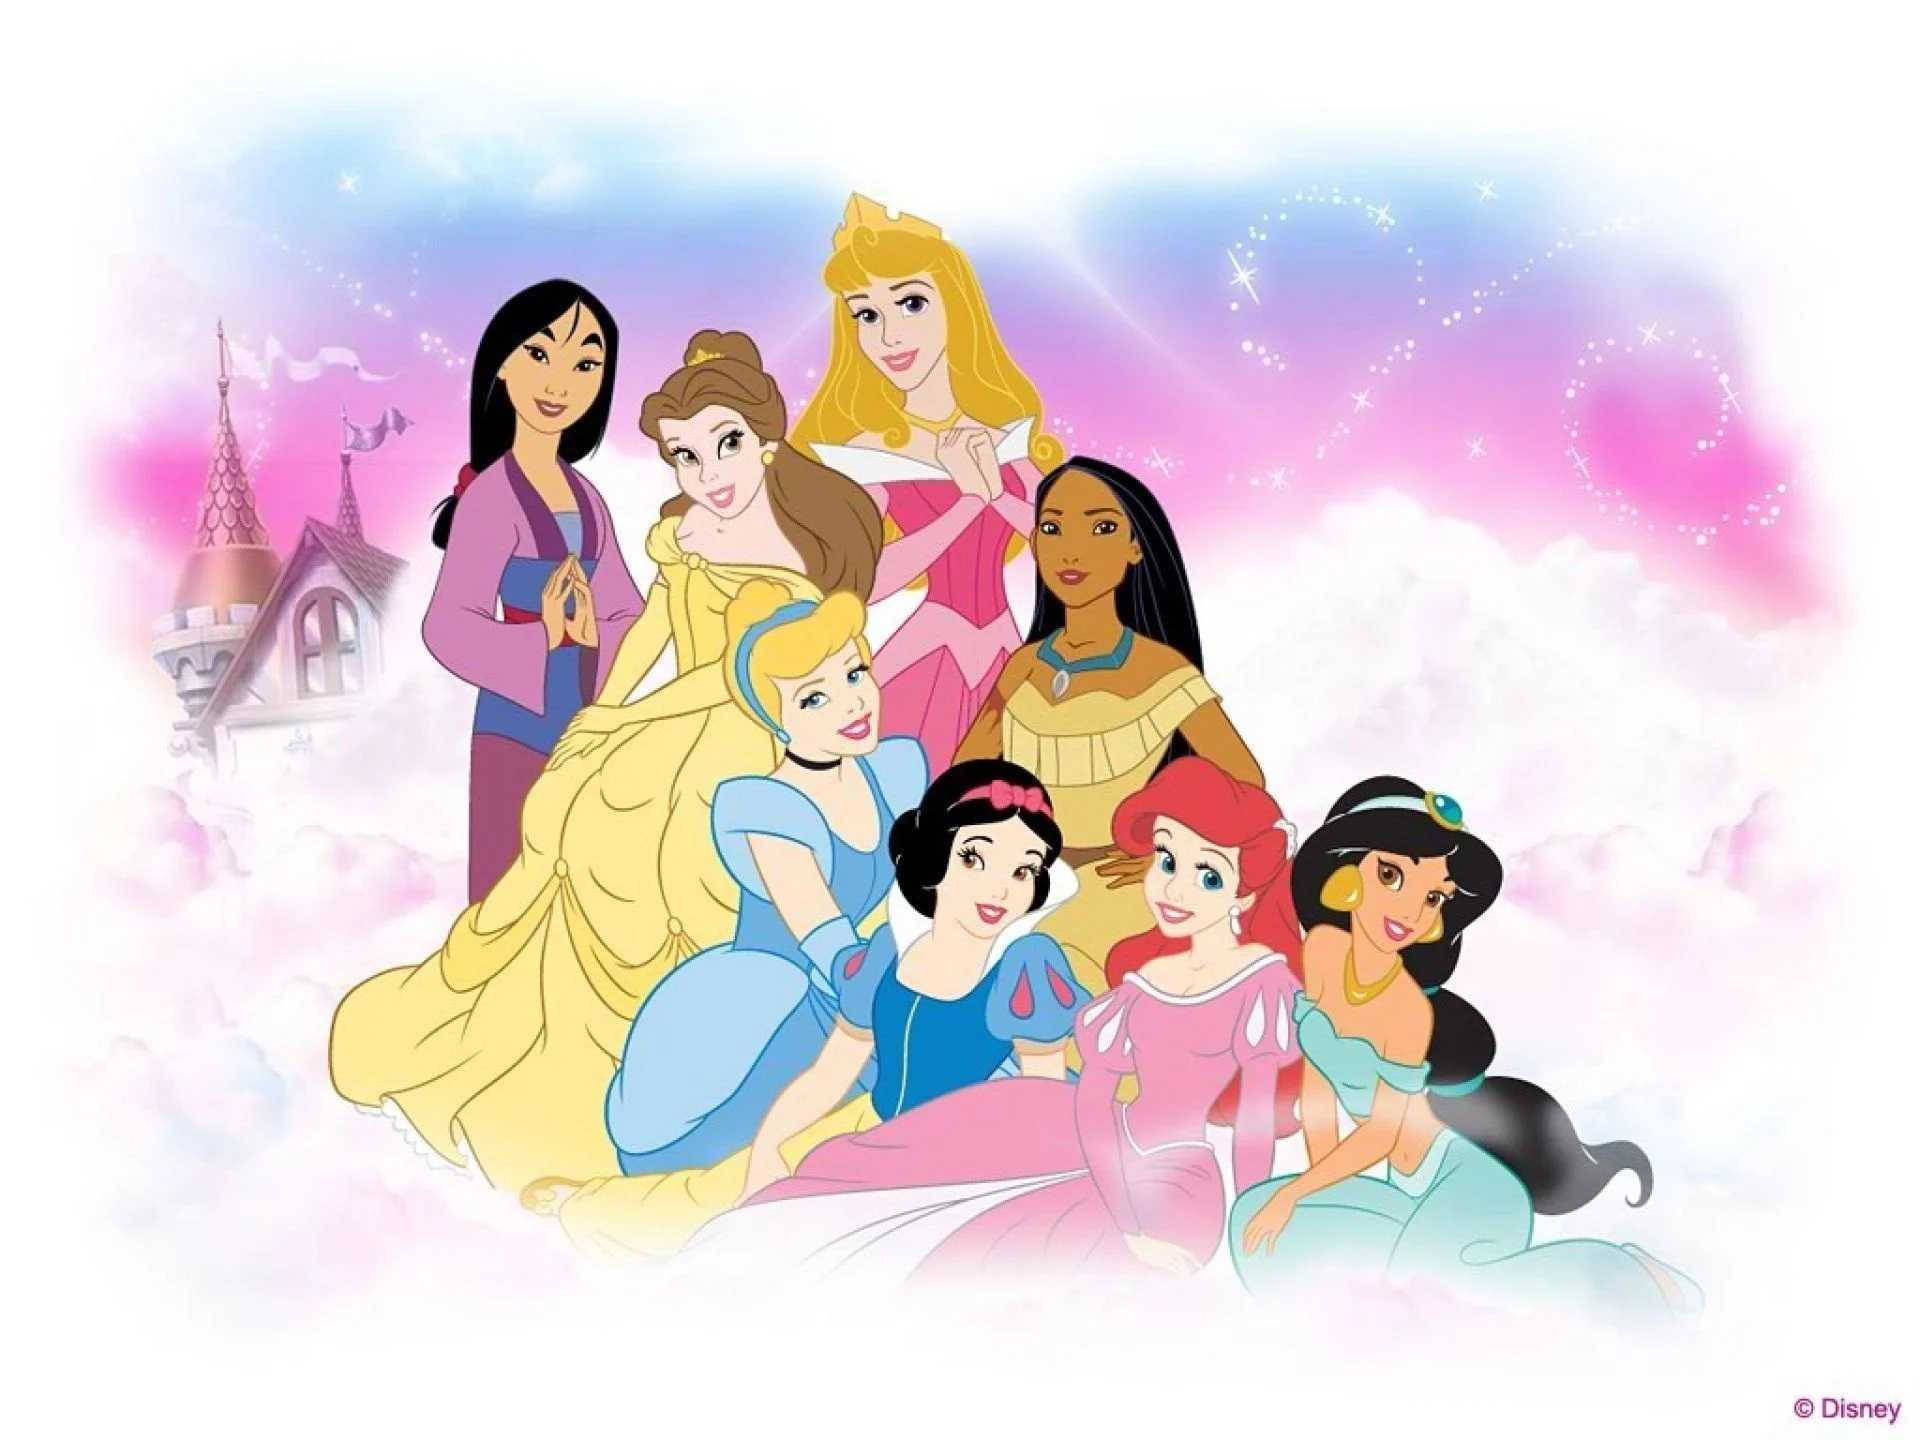 Free Beautiful Princess Wallpaper Downloads, [100+] Beautiful Princess  Wallpapers for FREE 